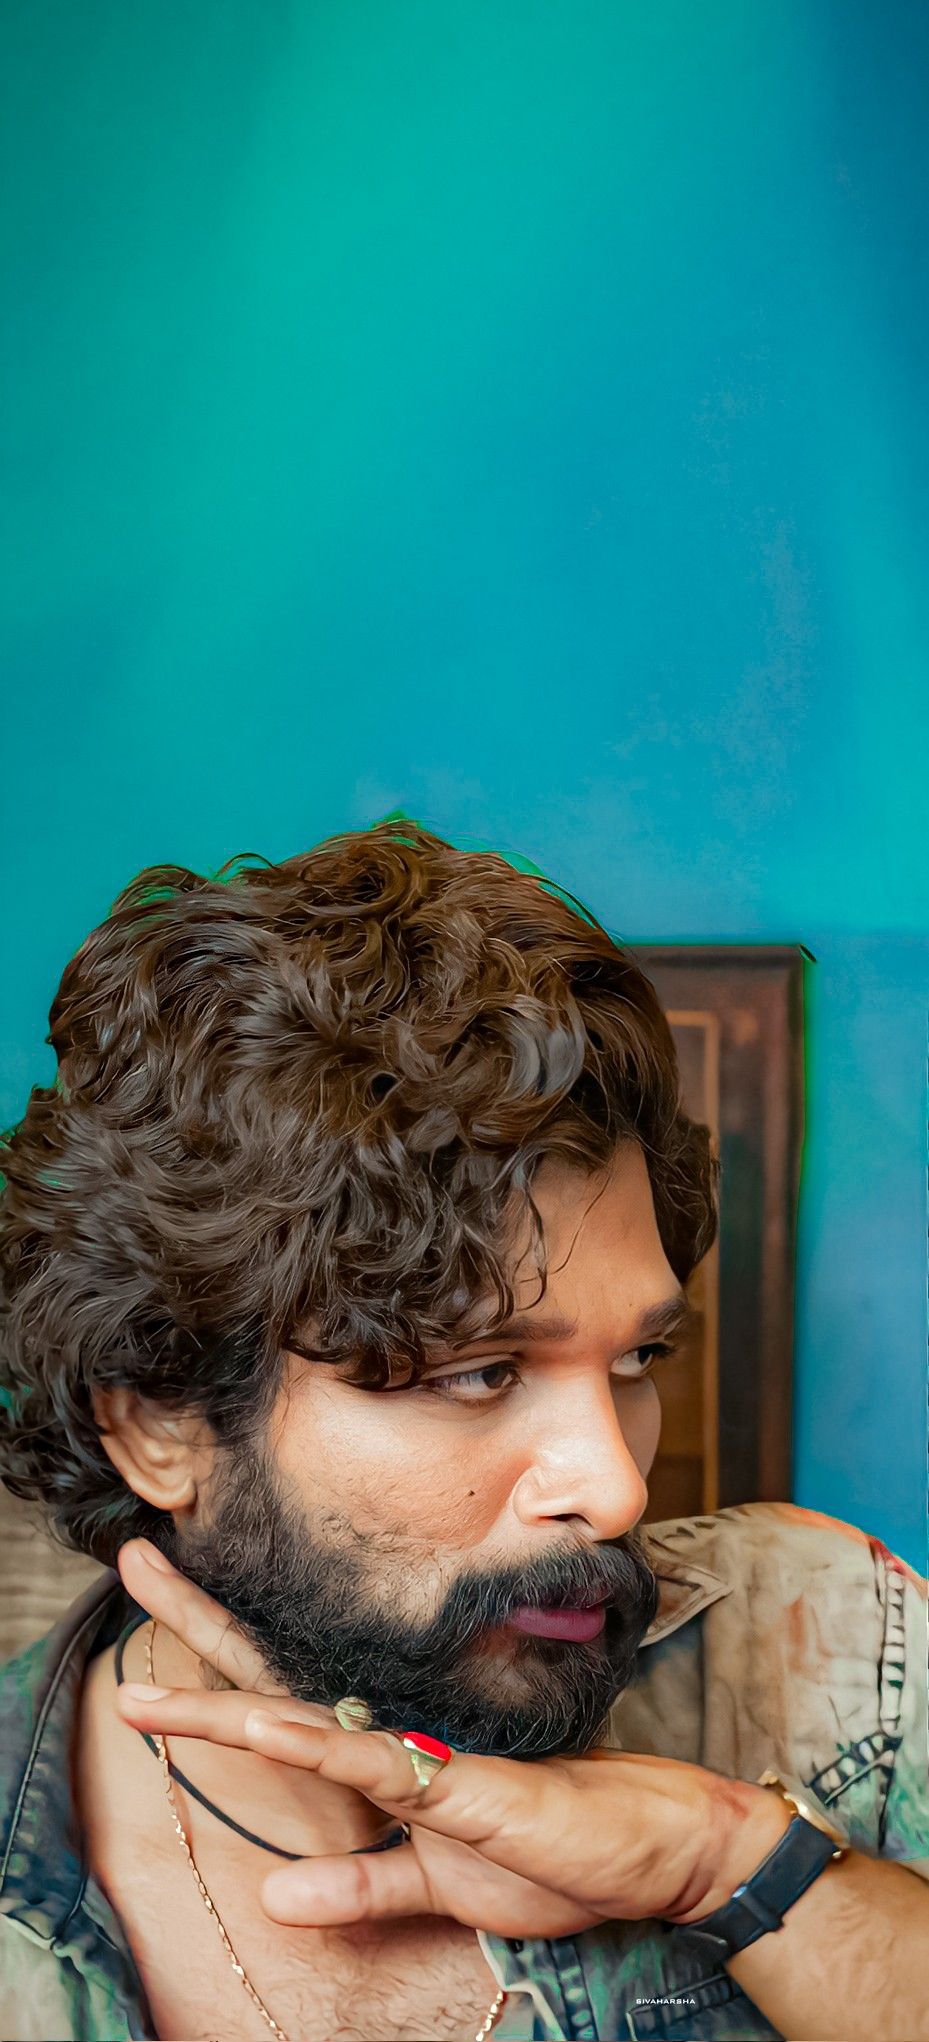 allu arjun hairstyles 36 Allu Arjun hairstyle back side | Allu Arjun hairstyle Name | Allu Arjun hairstyle Photos Allu Arjun Hairstyles